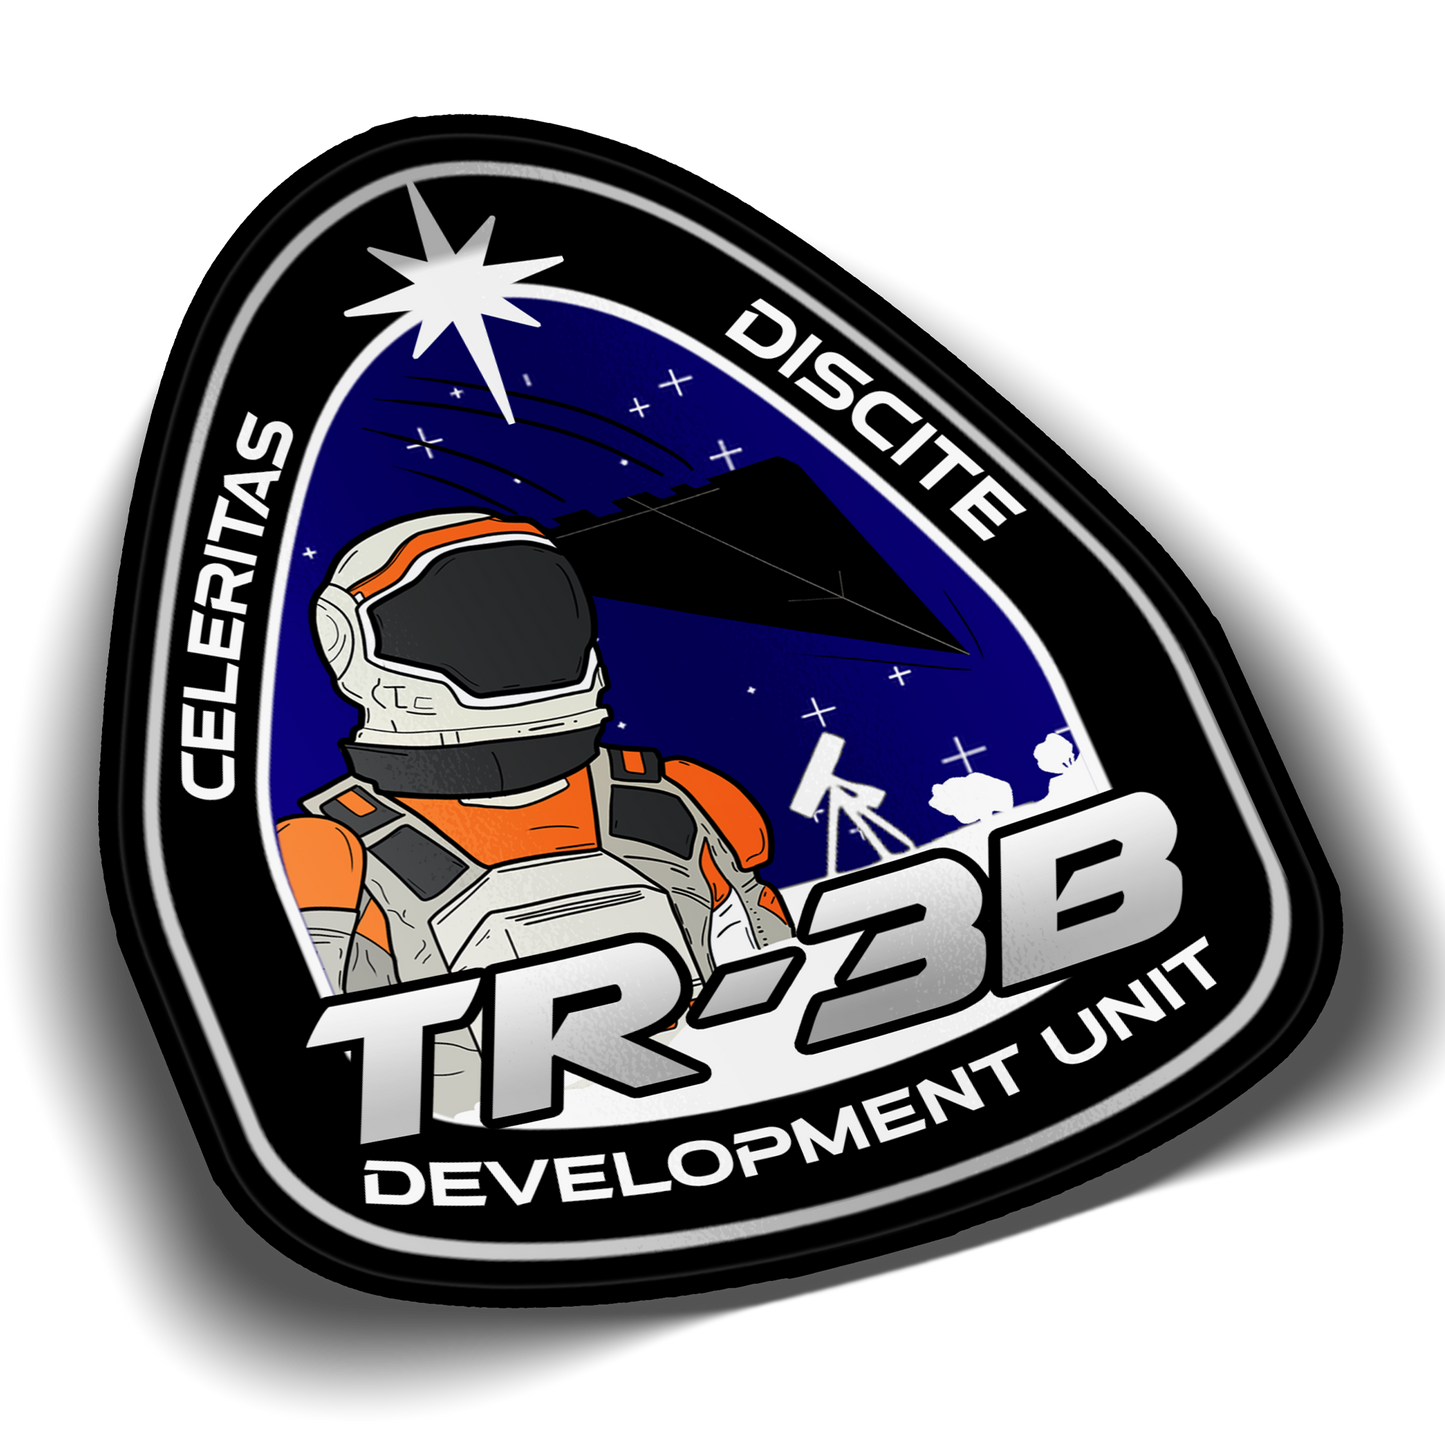 TR-3B Dev Team Sticker